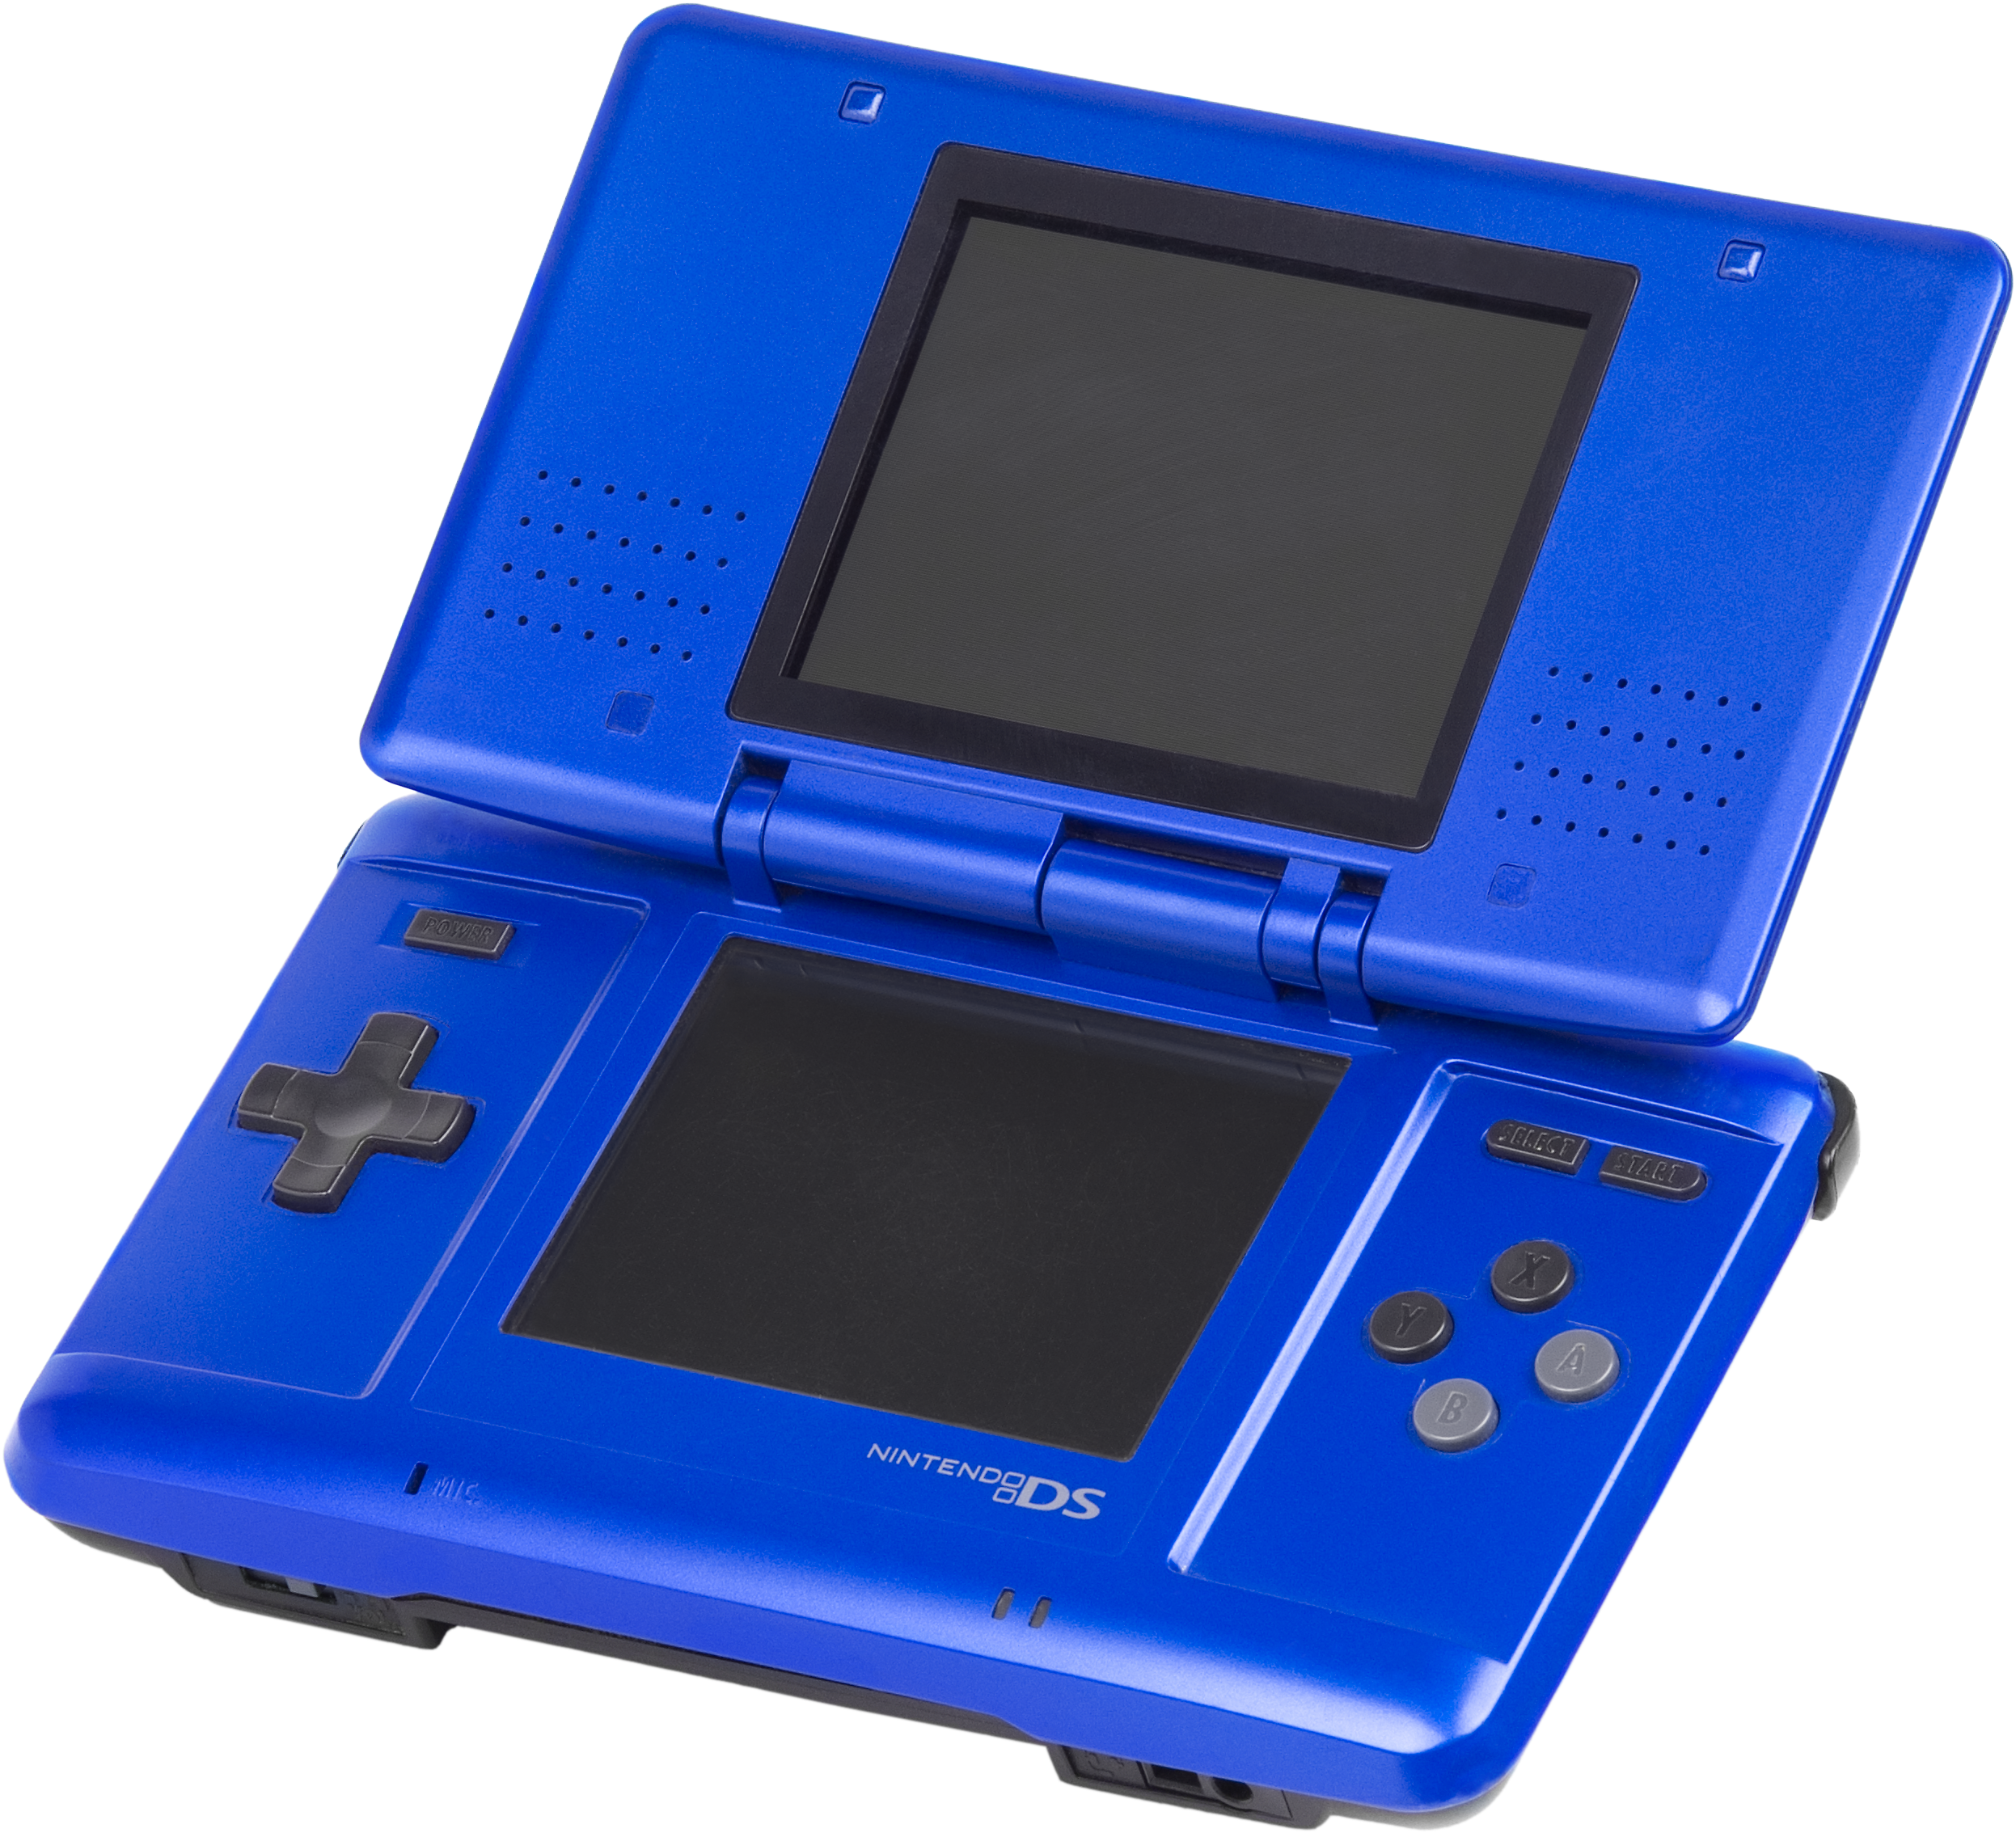 Nintendo Ds Fat Blue - Nintendo Ds (1126x1024), Png Download